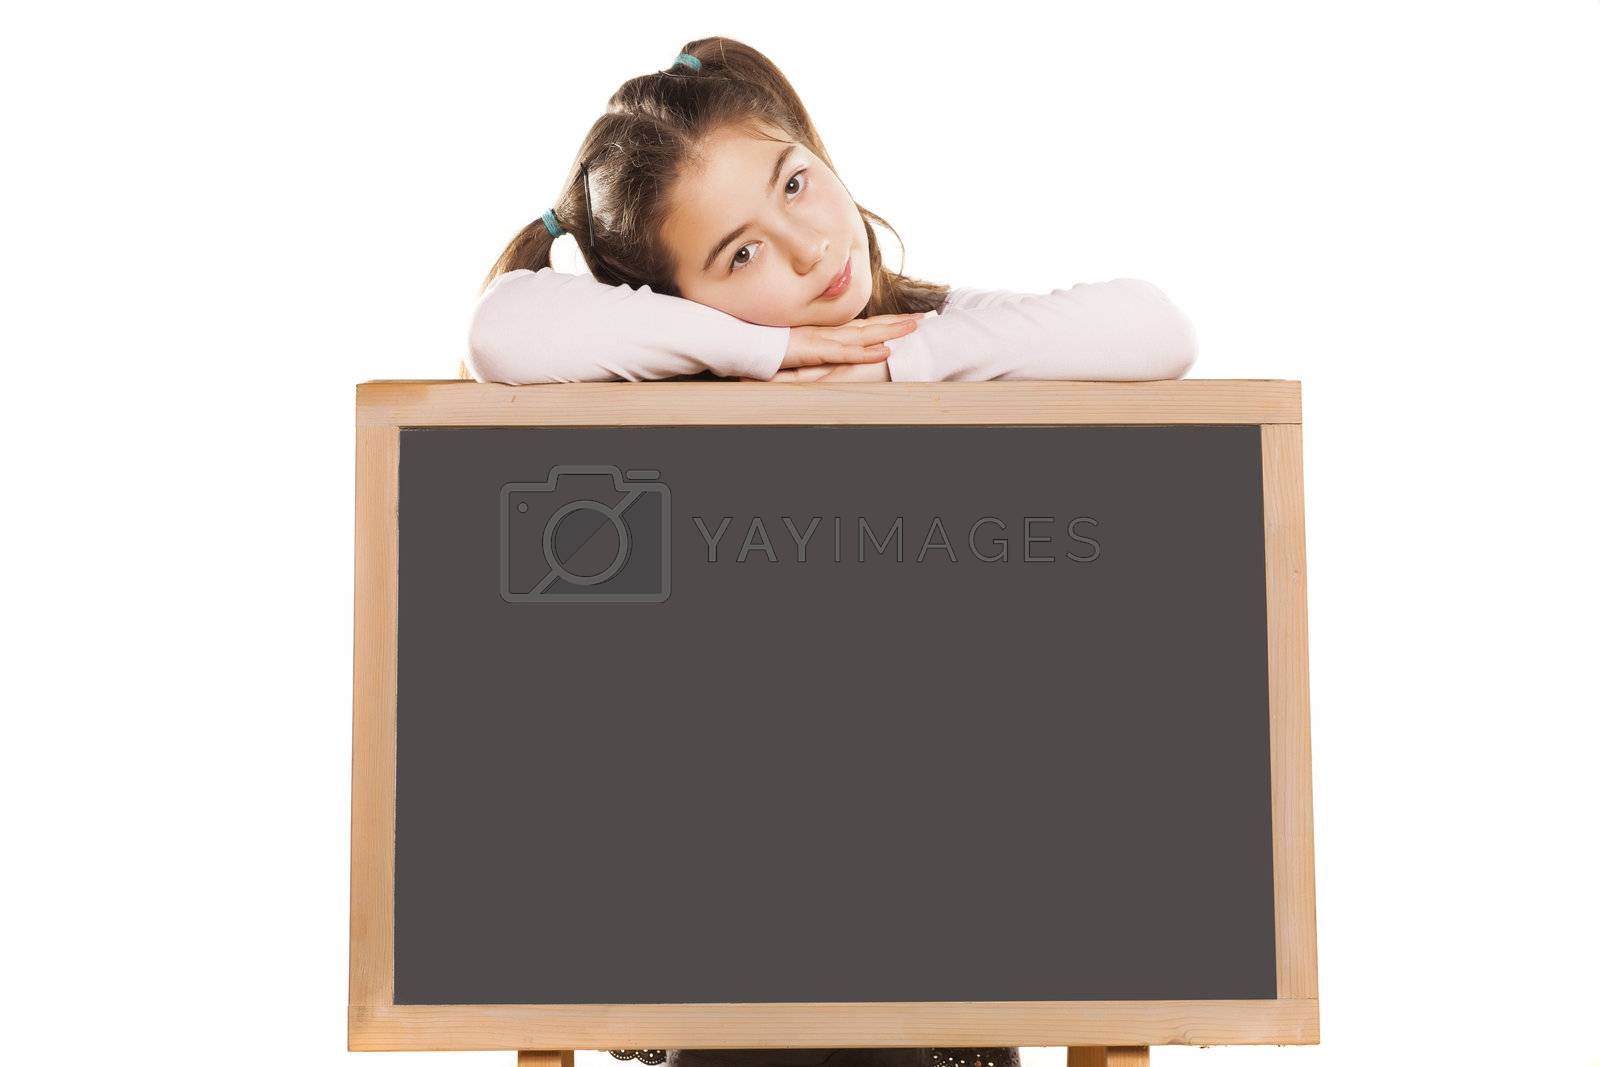 Royalty free image of little girl and empty blackboard by Vladimirfloyd